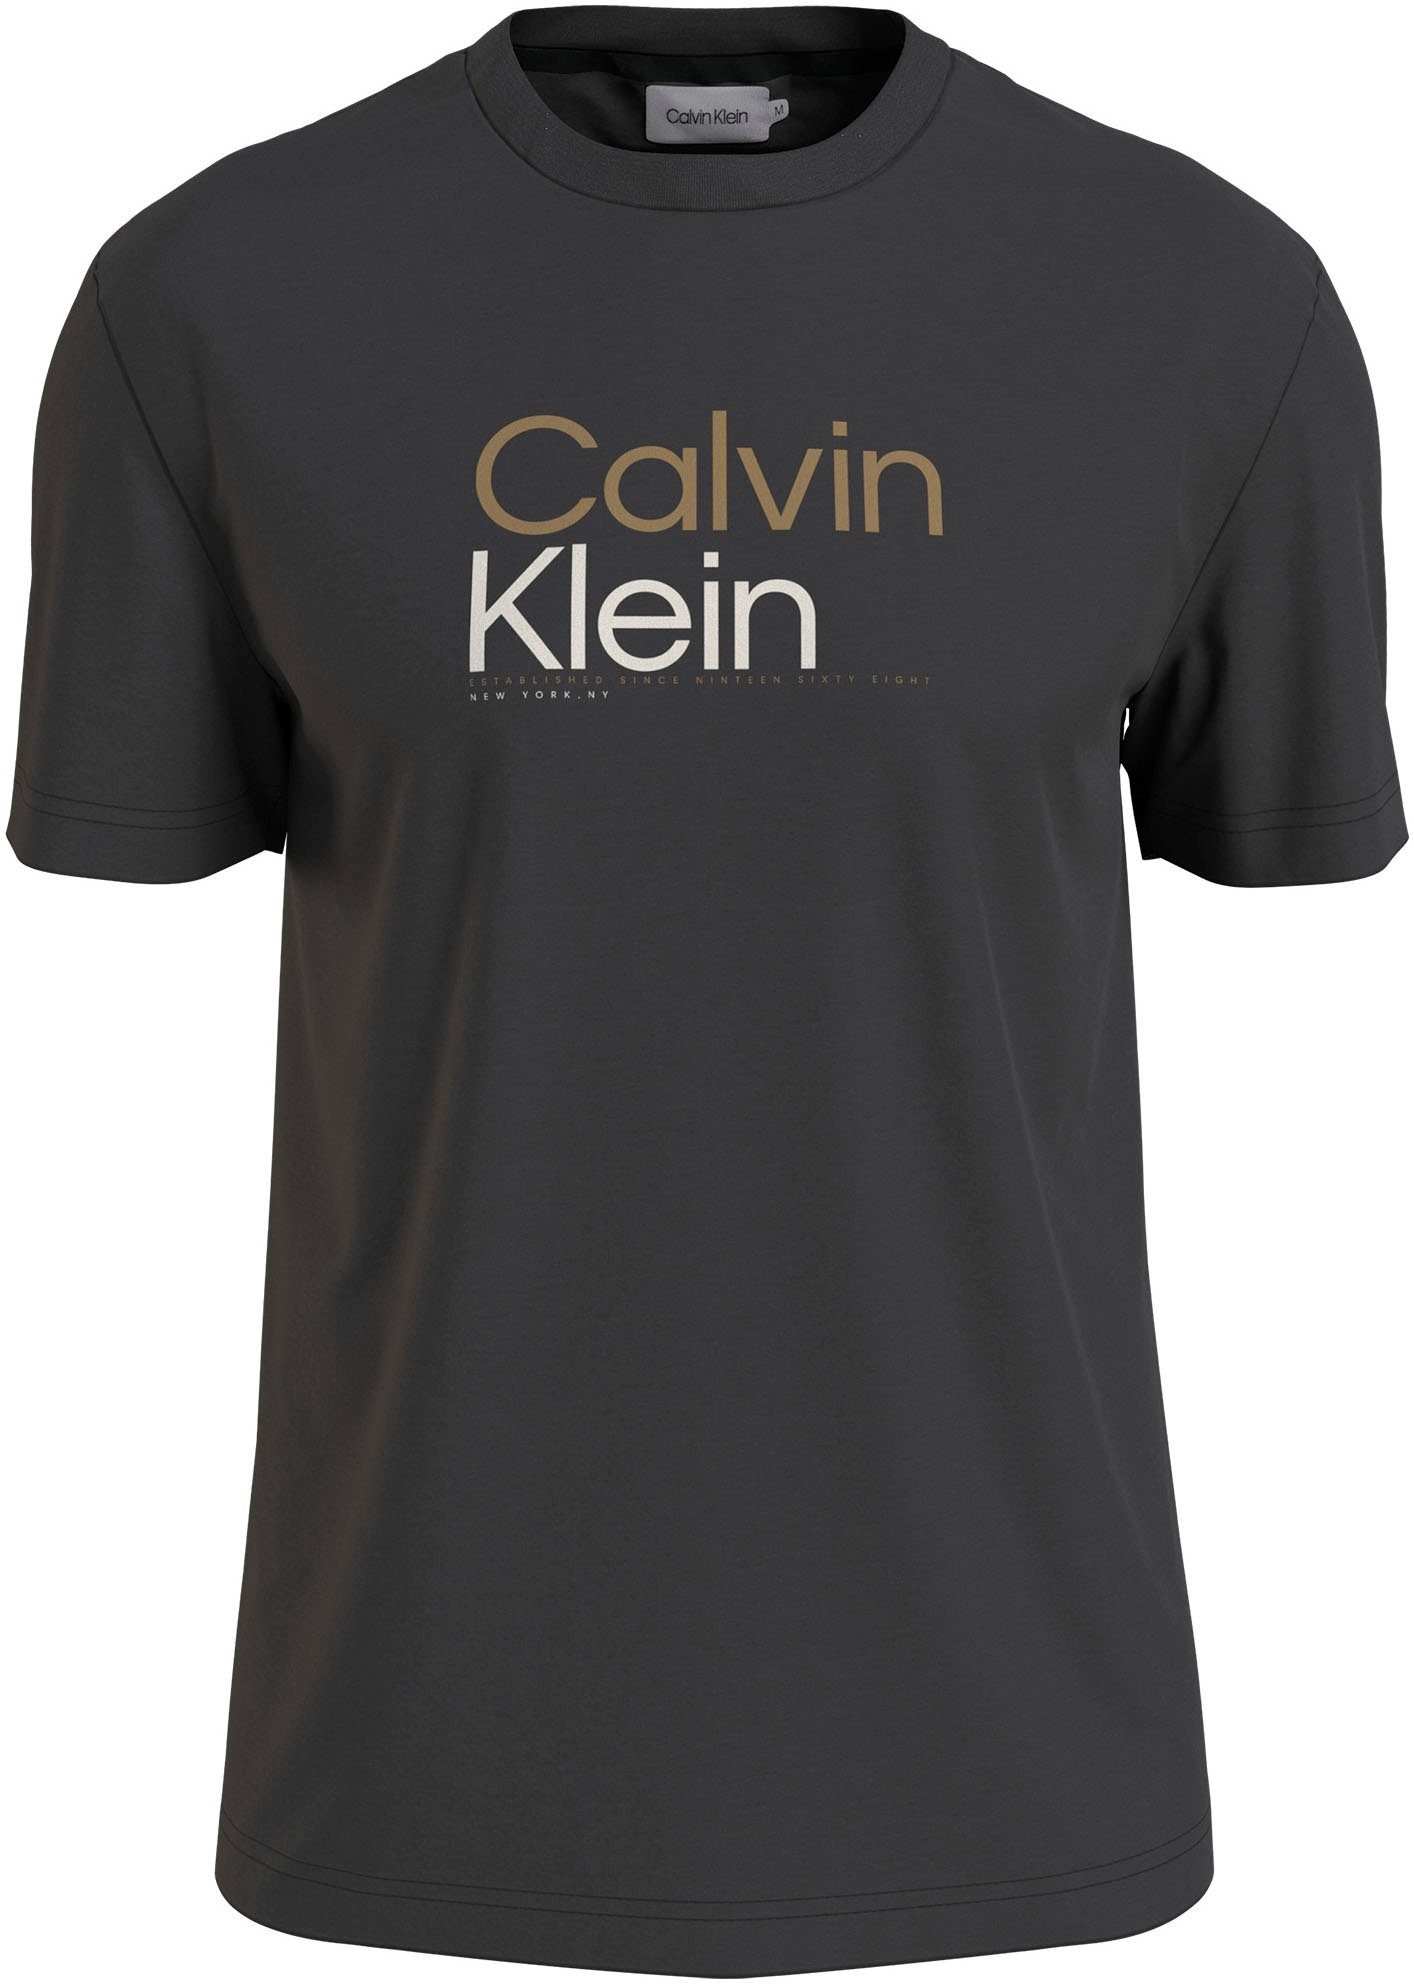 Calvin Klein mit MULTI LOGO Markenlabel COLOR T-SHIRT T-Shirt